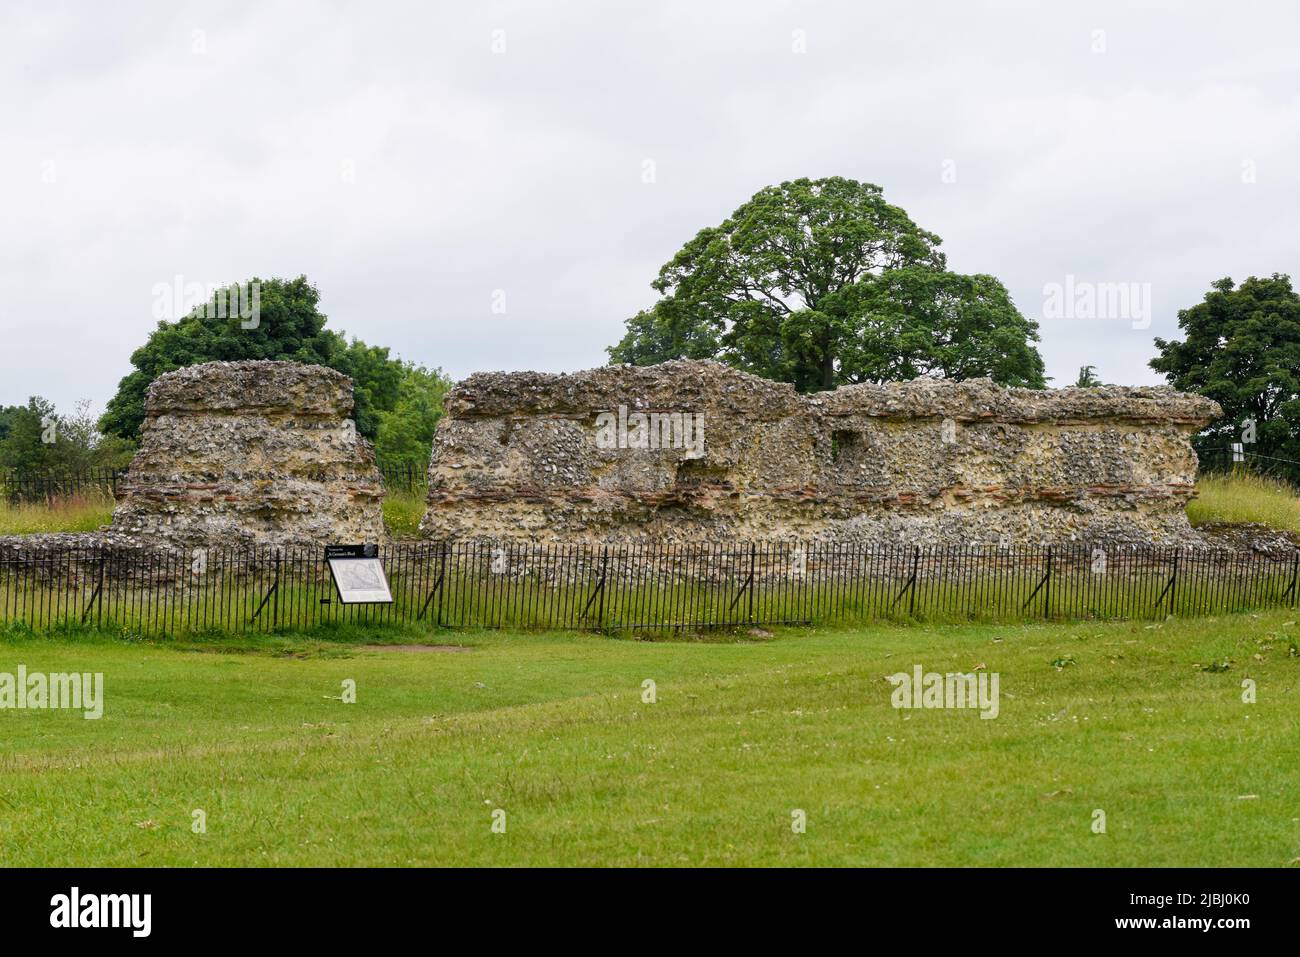 La arquitectura romana se conserva en el parque Verulamium en St Albans, Inglaterra Foto de stock